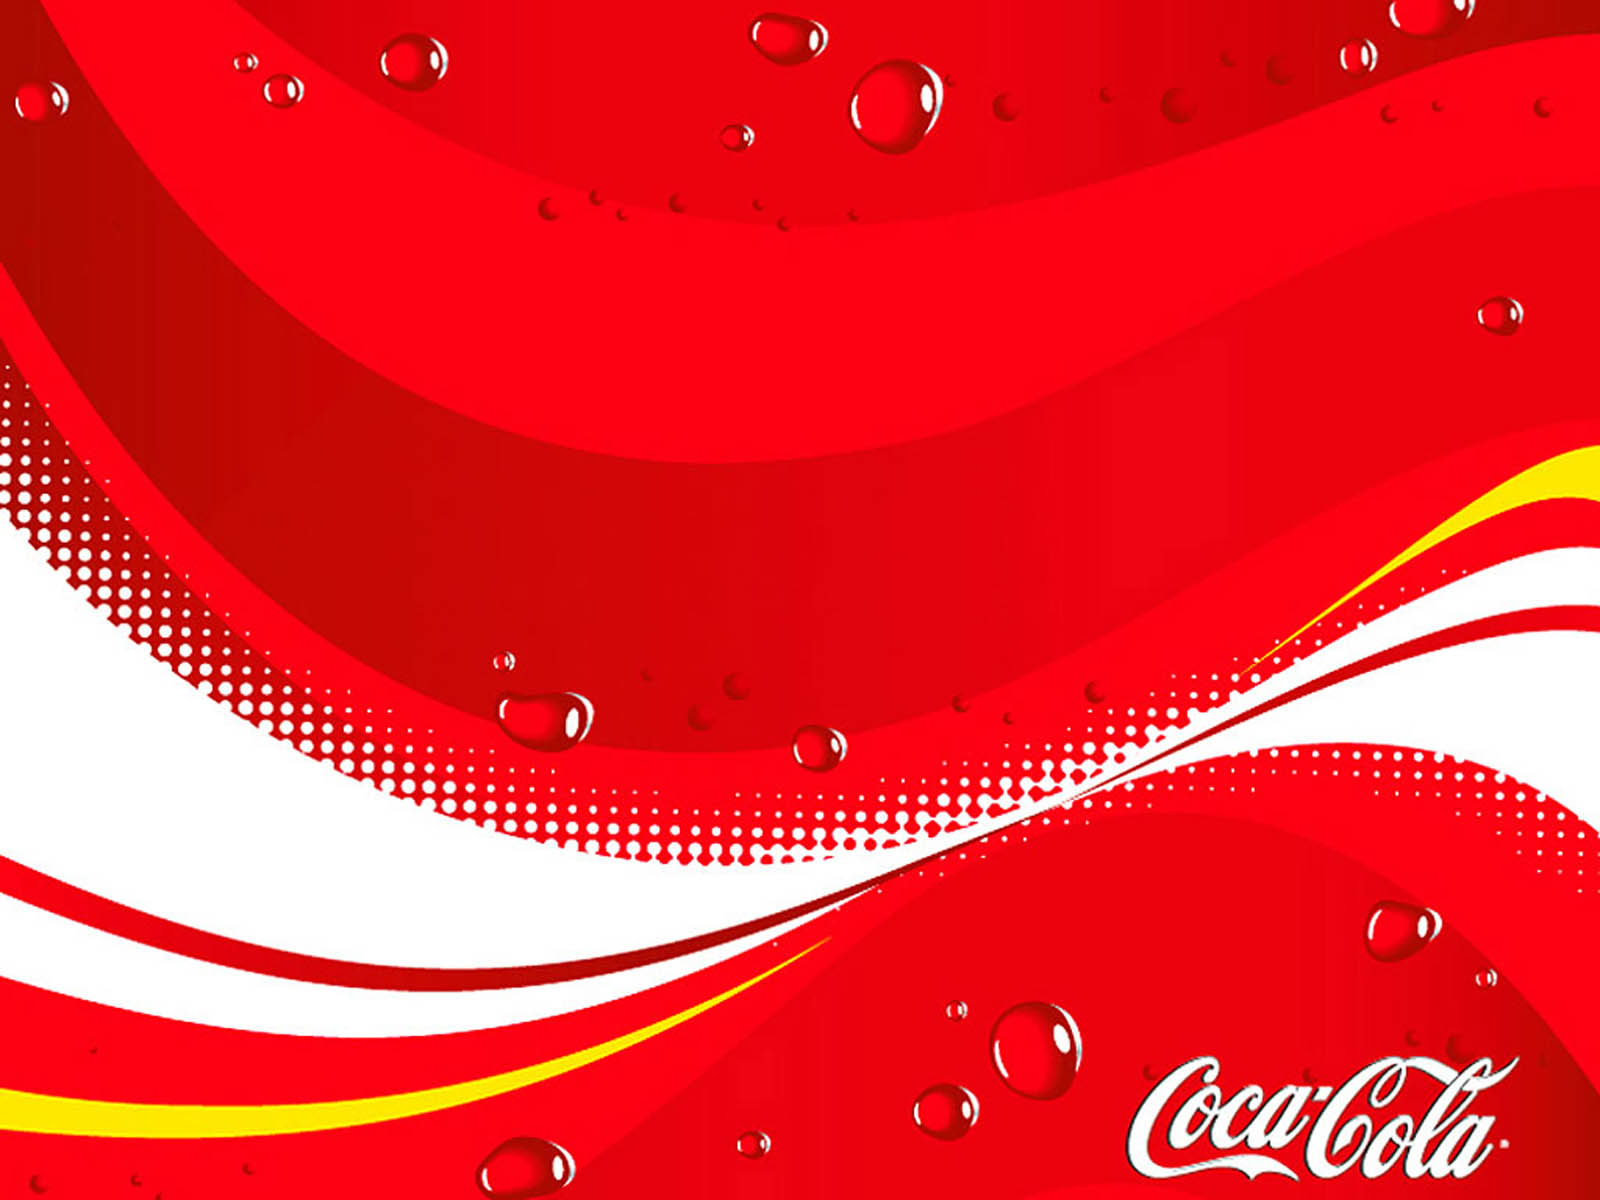 50+] Coca Cola Backgrounds and Wallpaper - WallpaperSafari